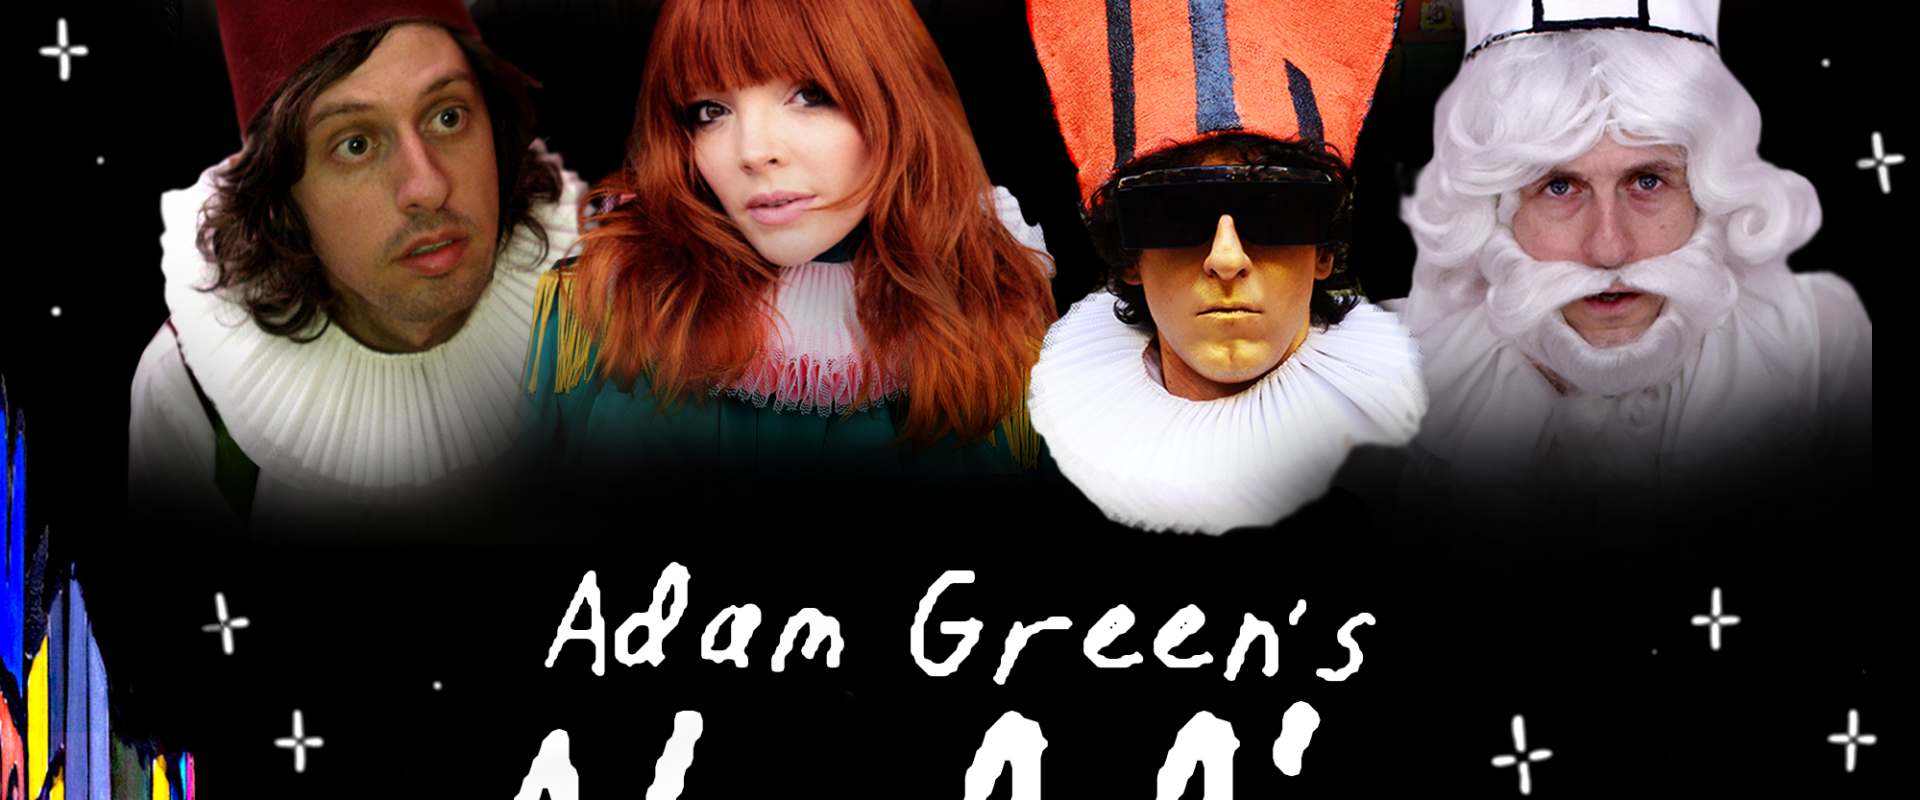 Adam Green's Aladdin background 1